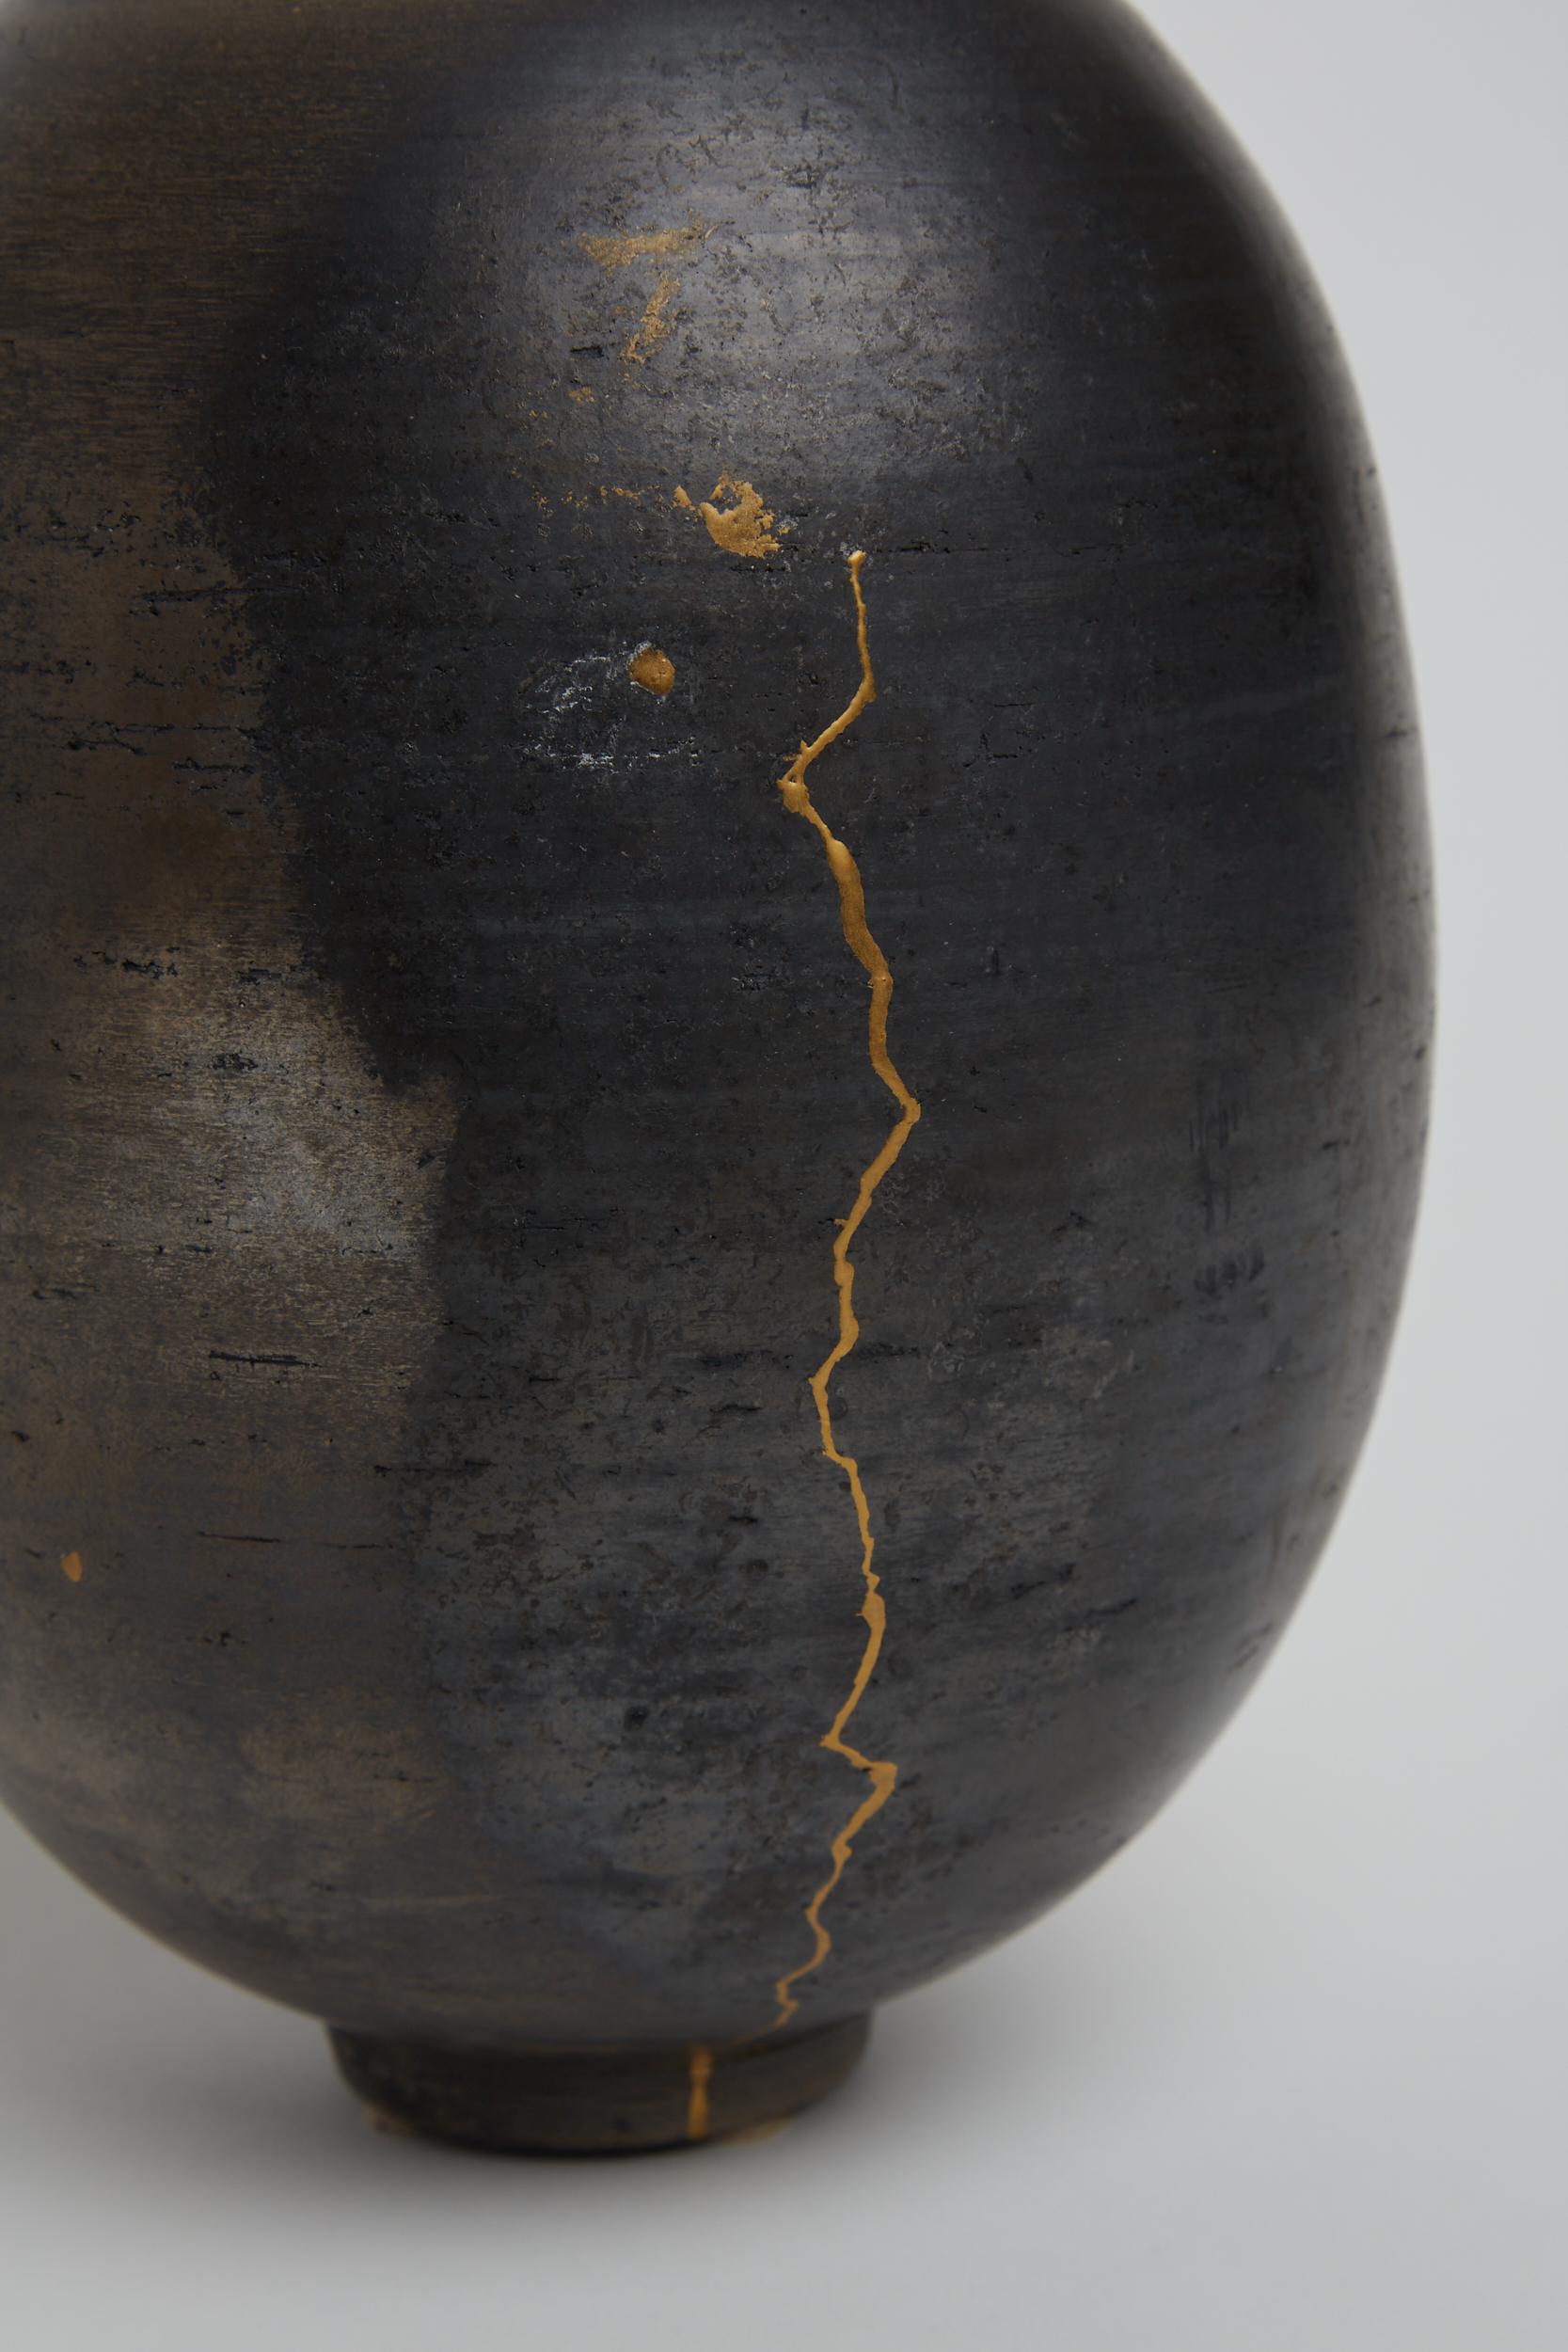 Gold Unique Vase by Karen Swami, 2021